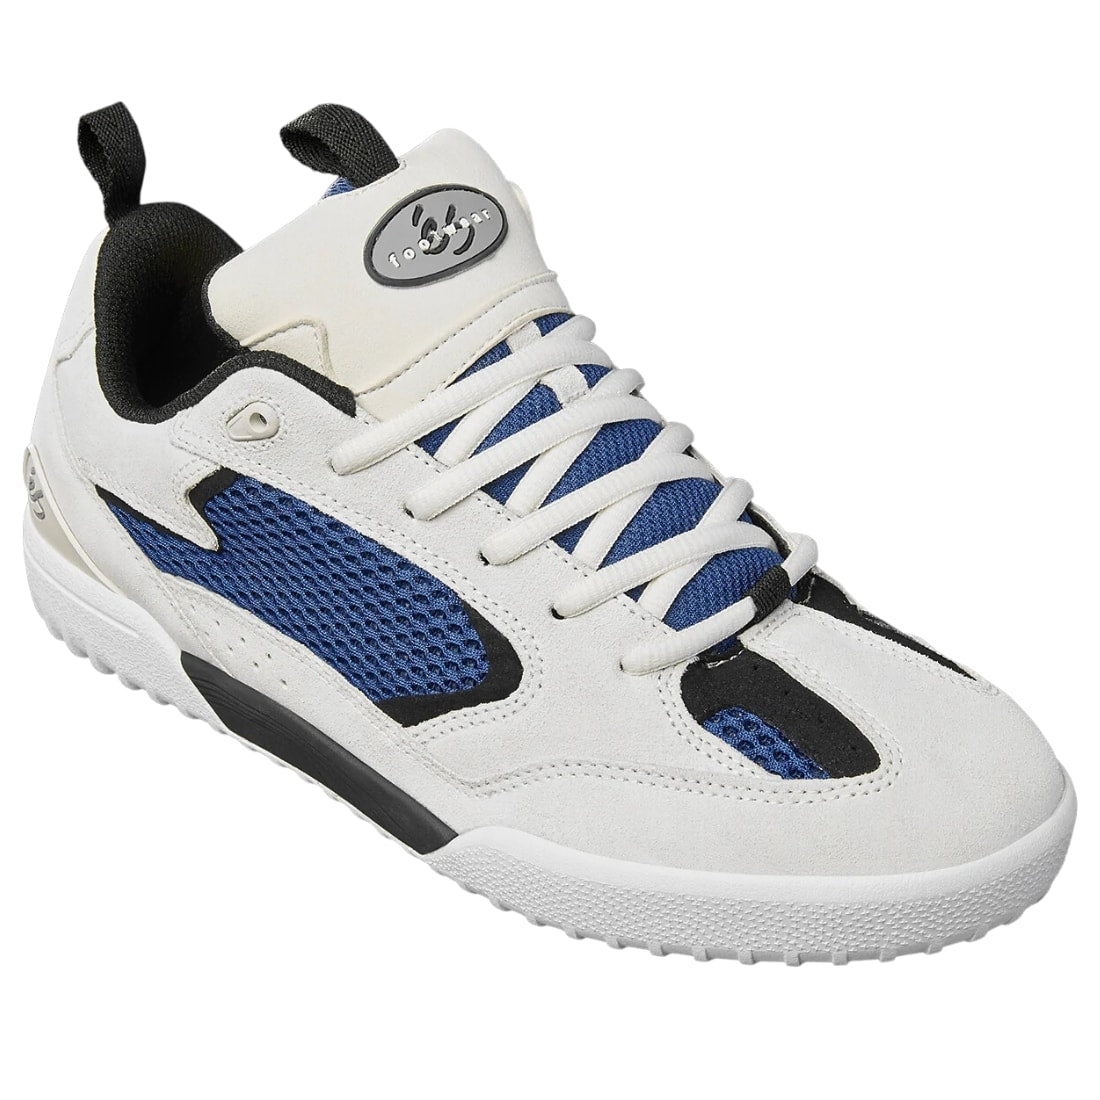 Es Quattro Skate Shoes - White/Blue/Black - Mens Skate Shoes by eS